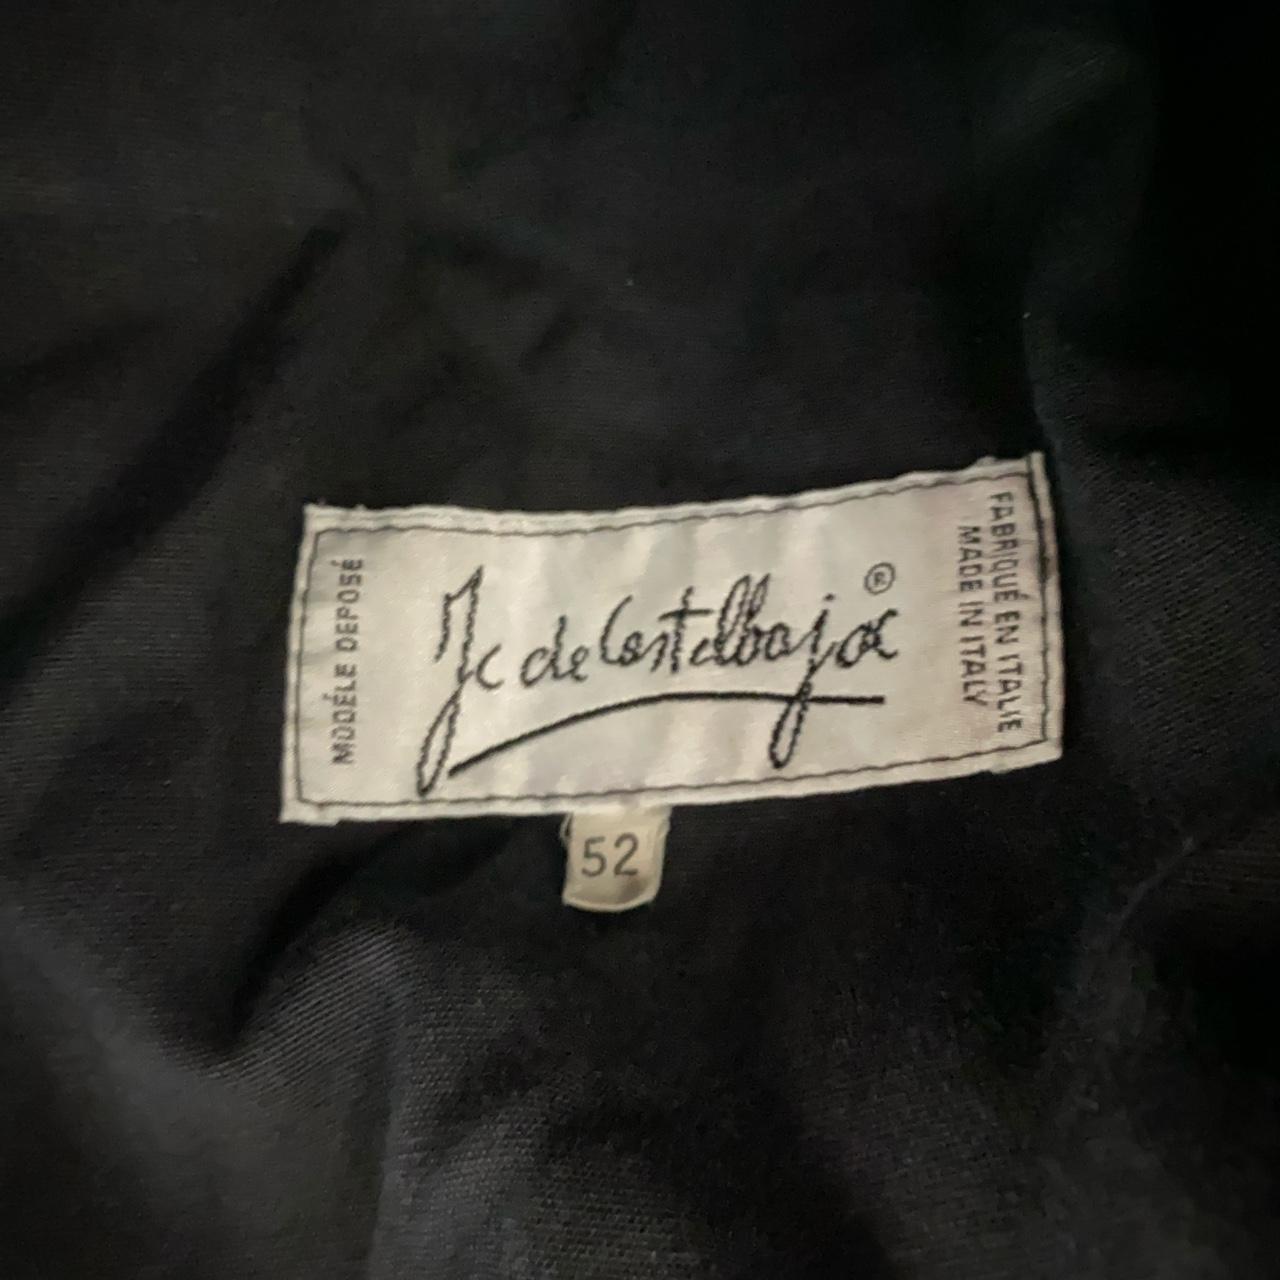 JC de Castelbajac Jacket